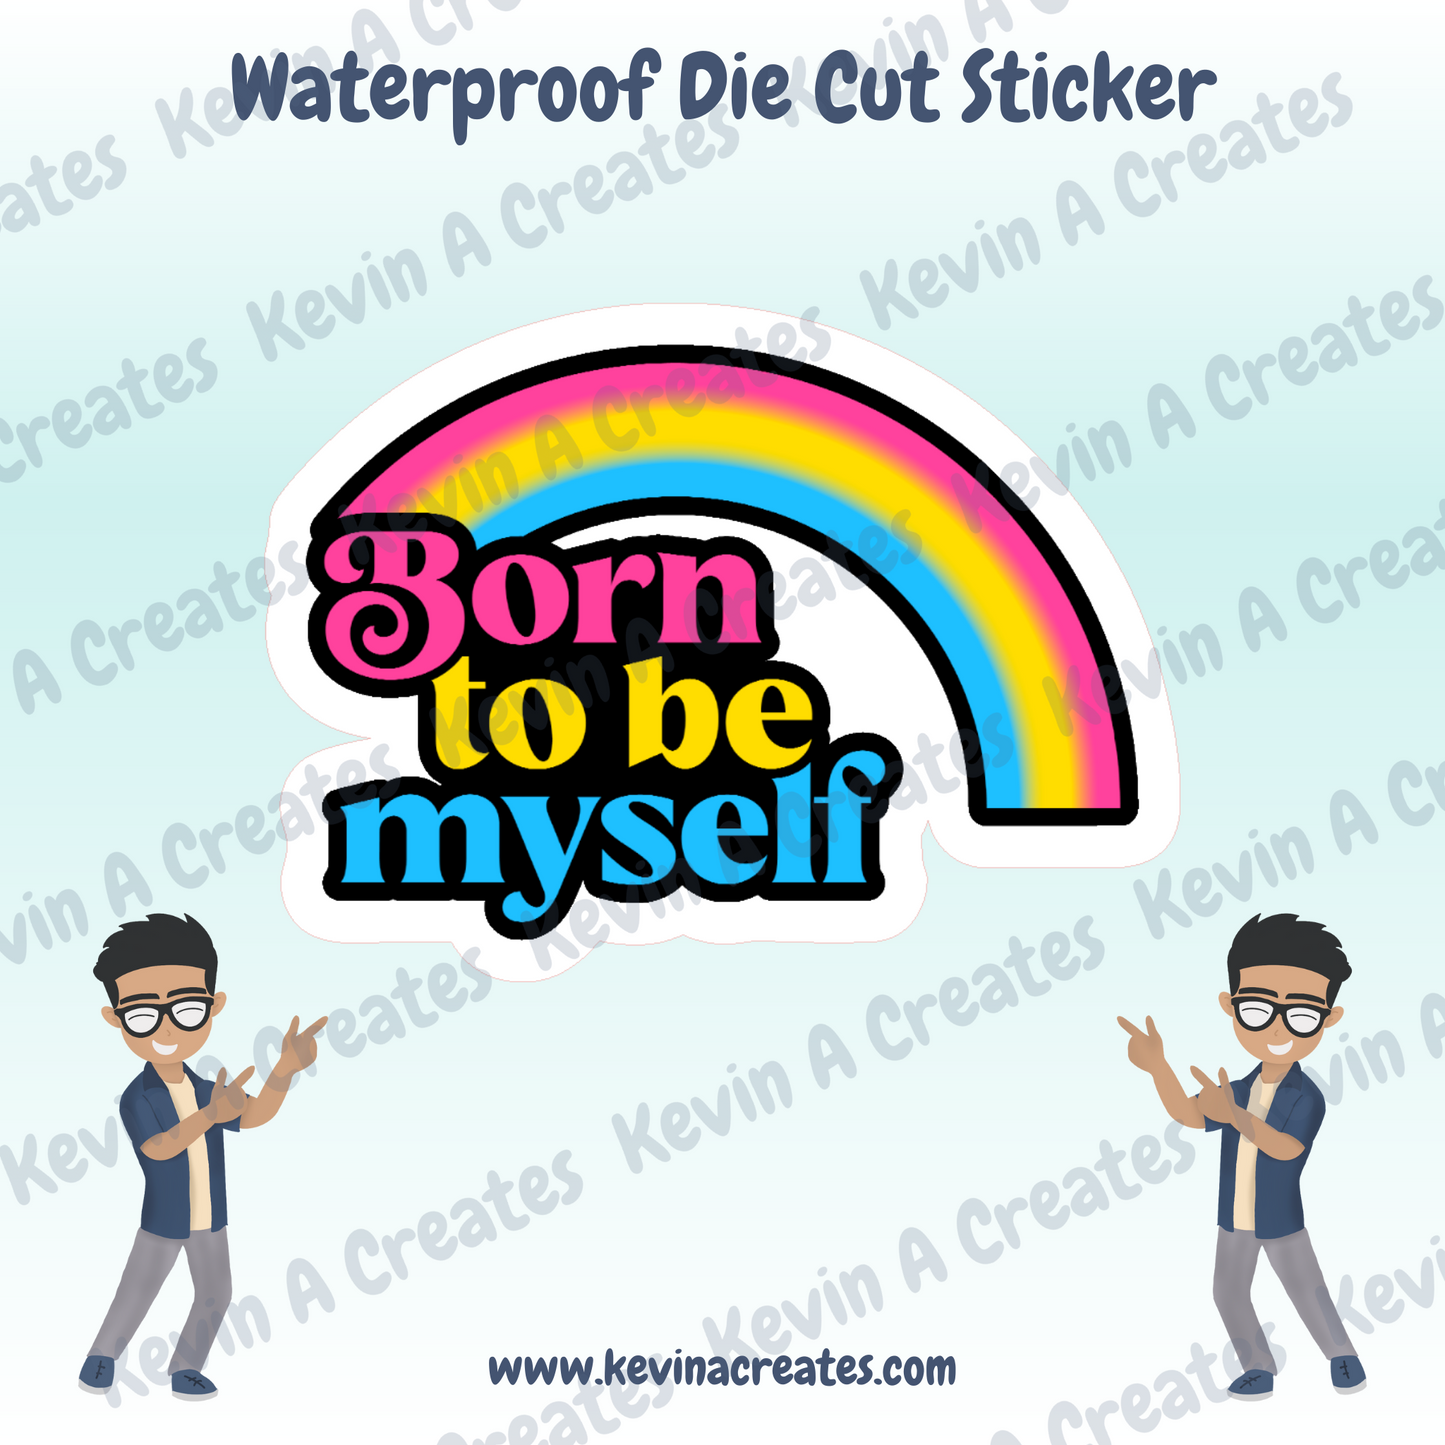 DC-091, Born To Be Myself - Pansexual Pride Die Cut Stickers